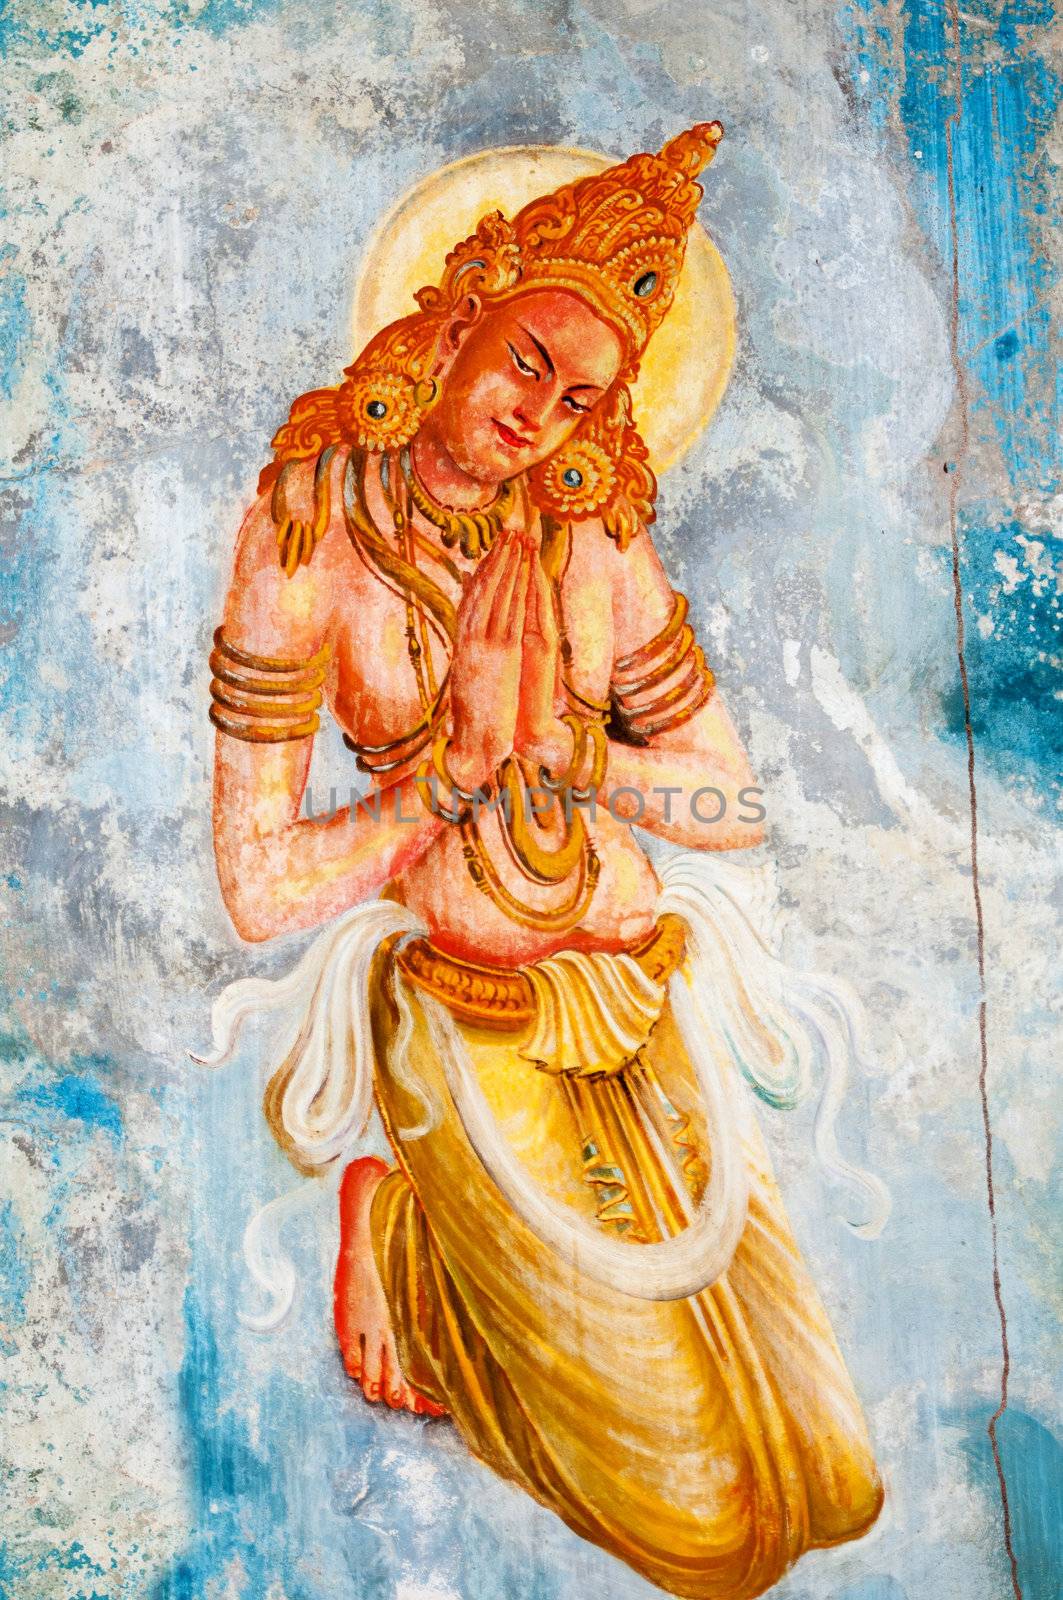 Traditional Sri Lanka style art with the buddhism angel - deva image